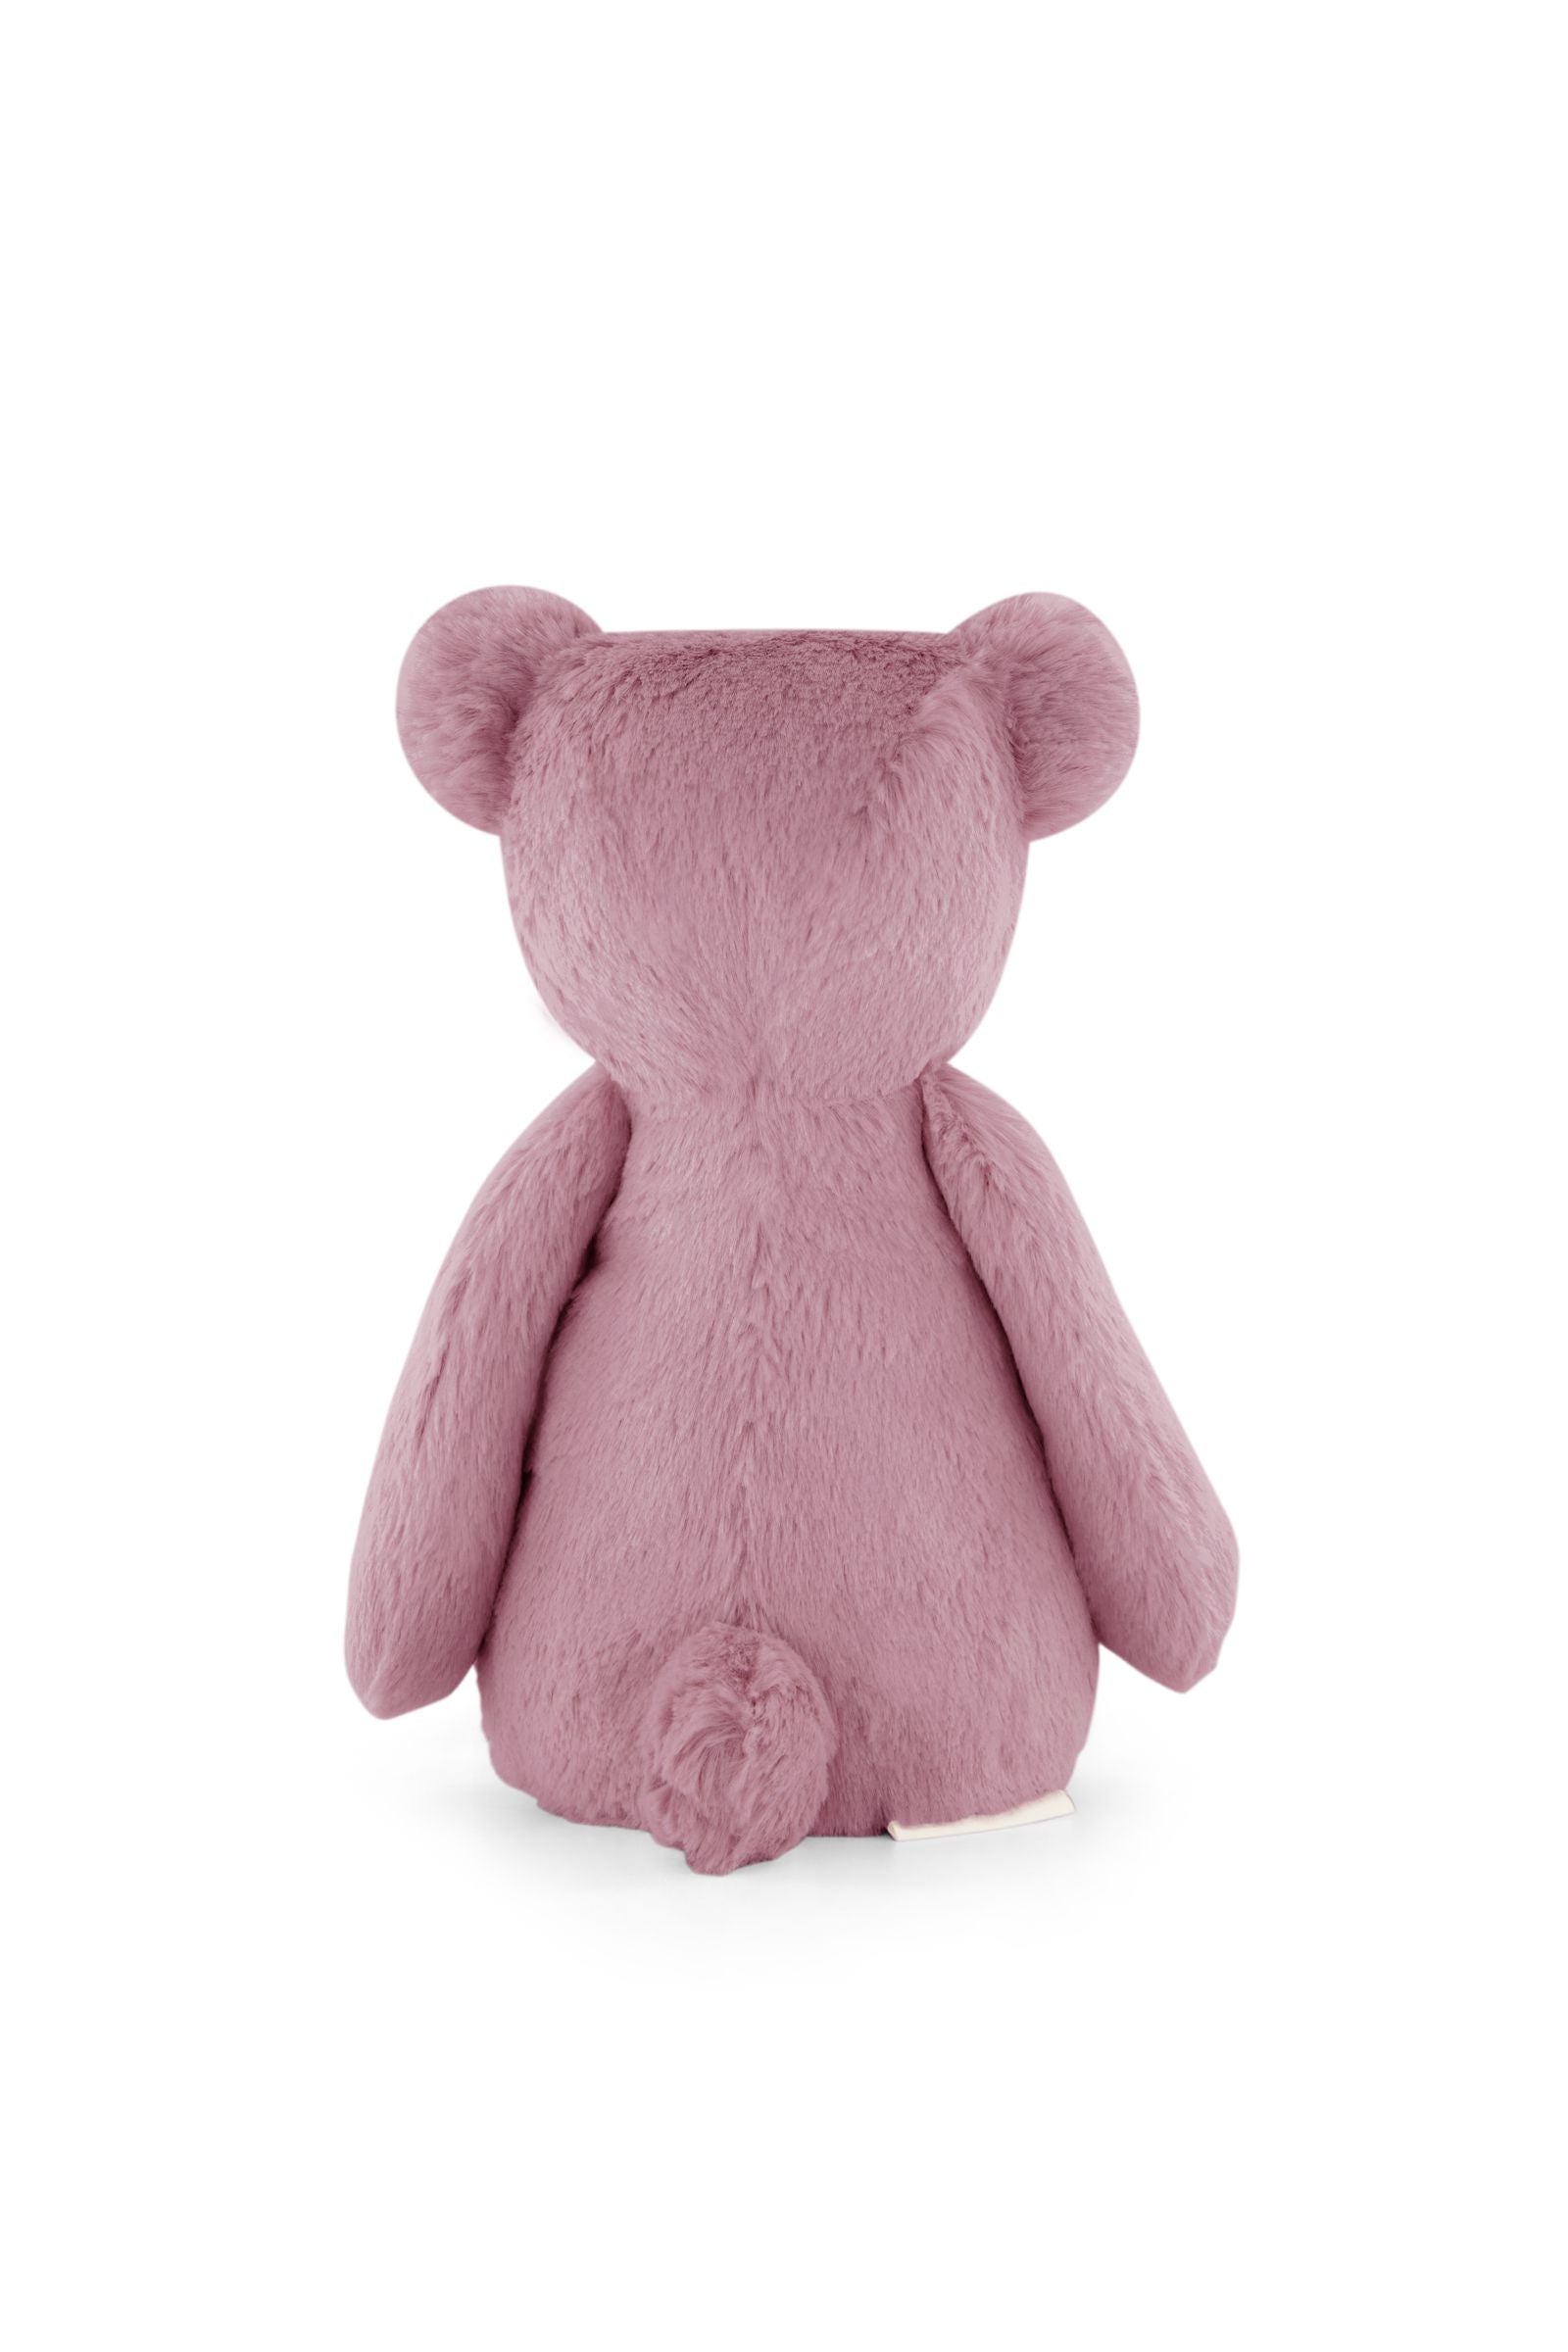 Snuggle Bunnies - George the Bear - Lilium 30cm-Toys-Jamie Kay-The Bay Room